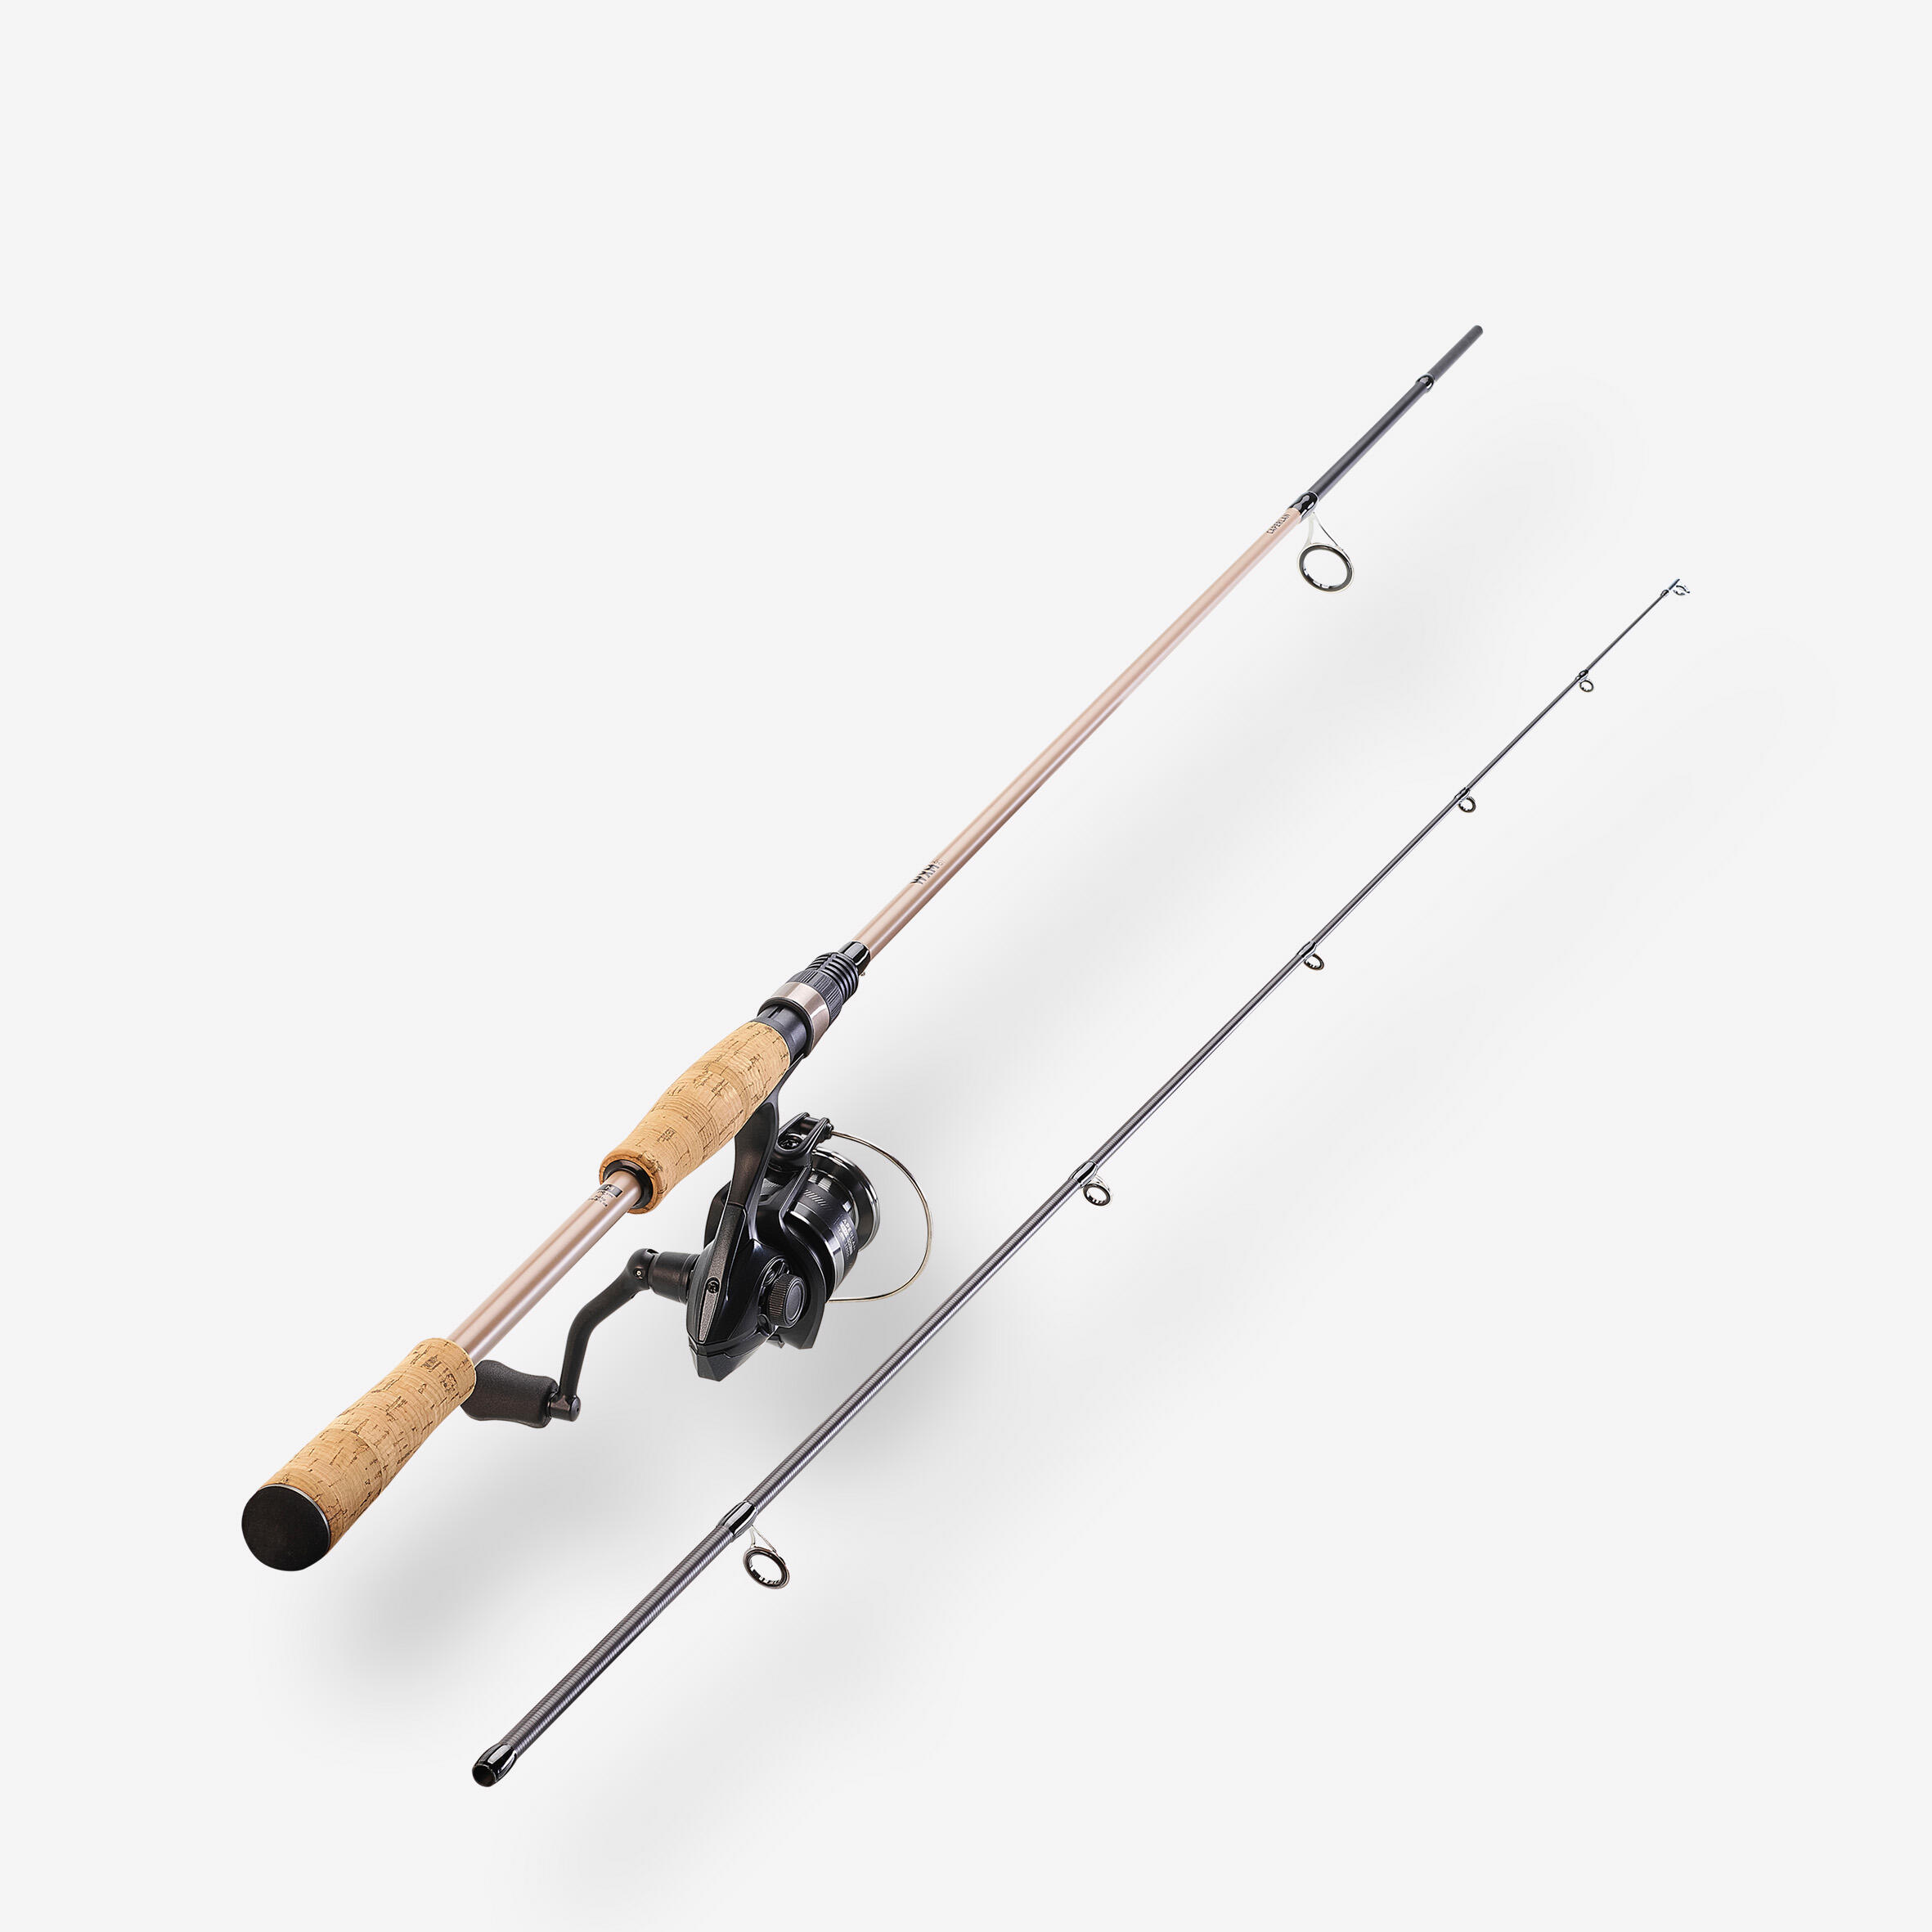 Fishing Rod Automatic 2.1 M, 2.4 M, 2.7 M Fishing Rod Fishing